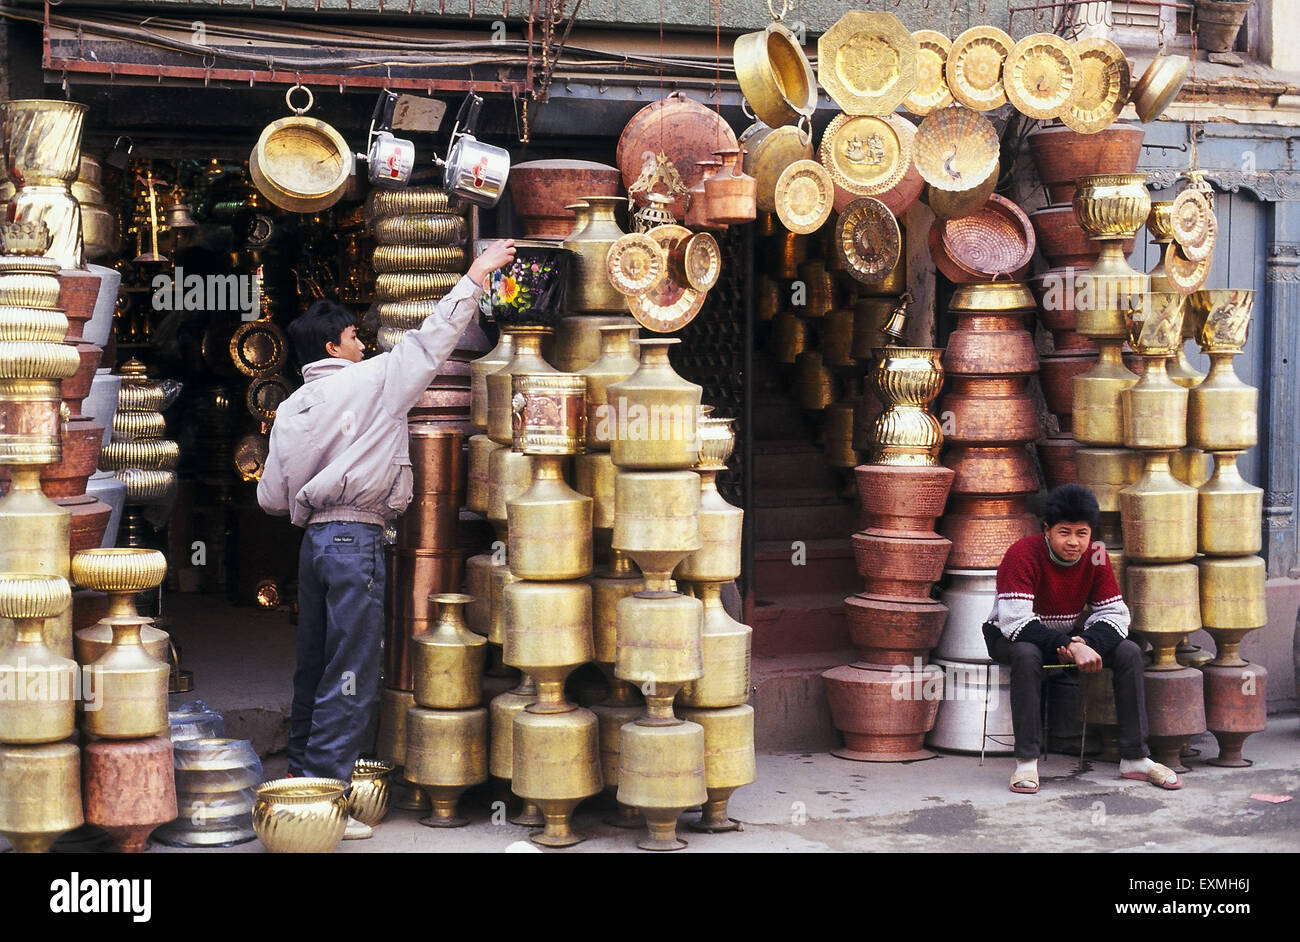 Brass pots shop ; India ; Asia ; Asian ; Indian Stock Photo - Alamy